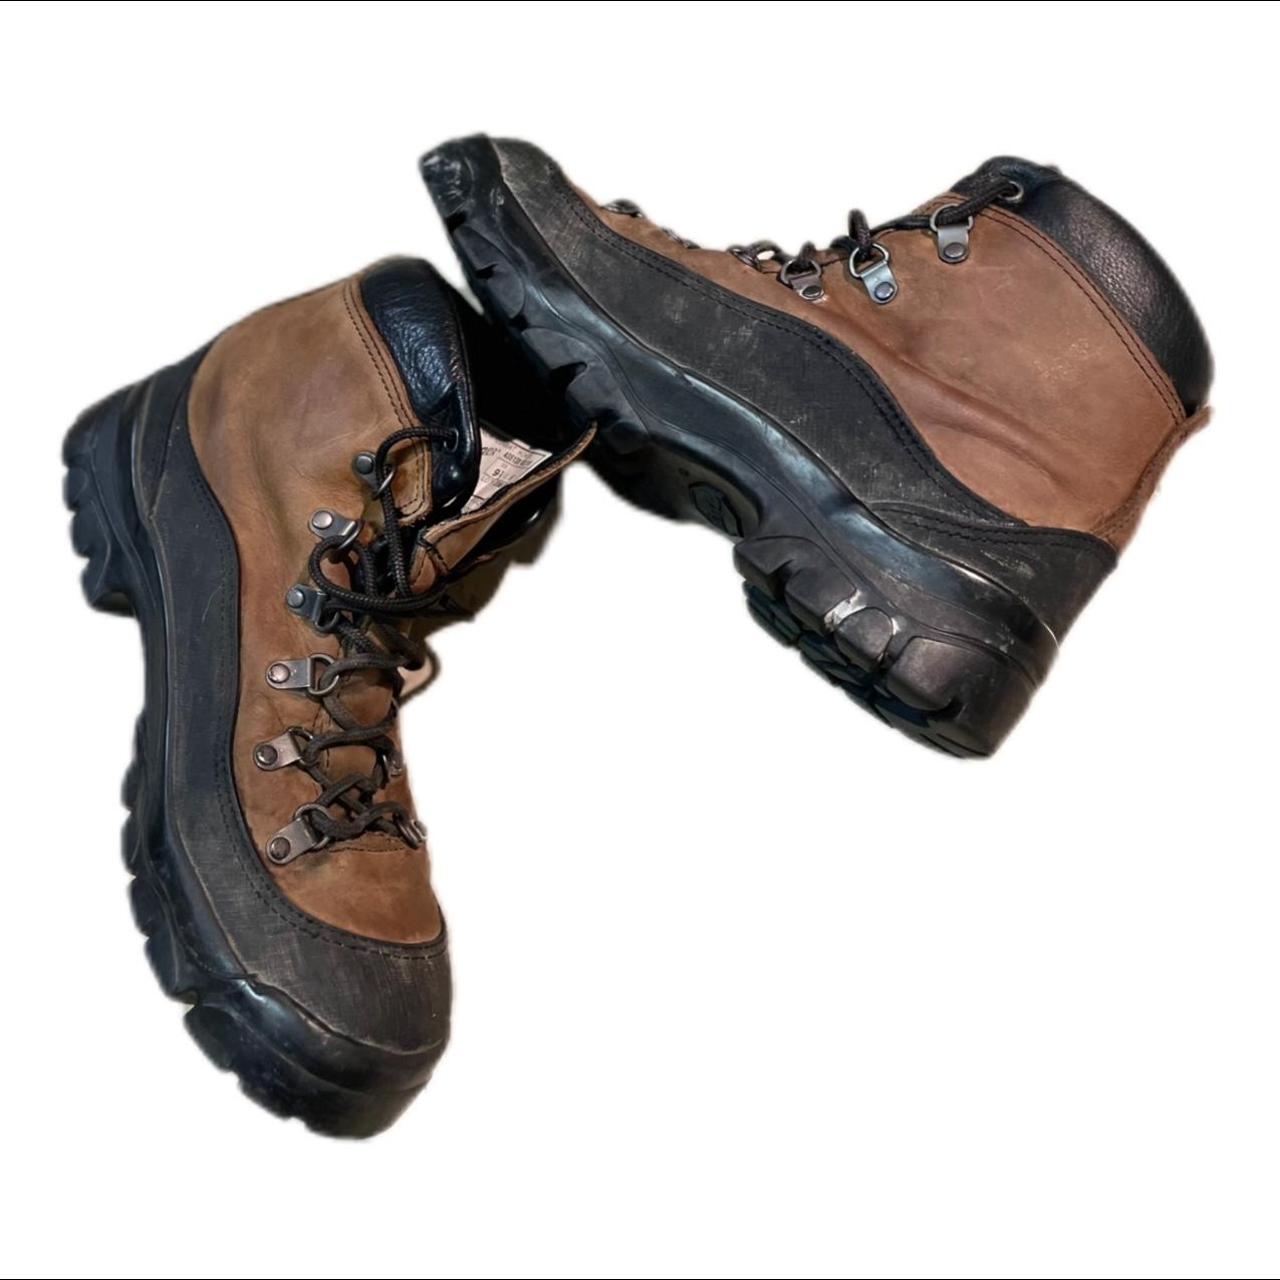 Danner Combat Hiker Mens Size 9.5 Brown Leather... - Depop